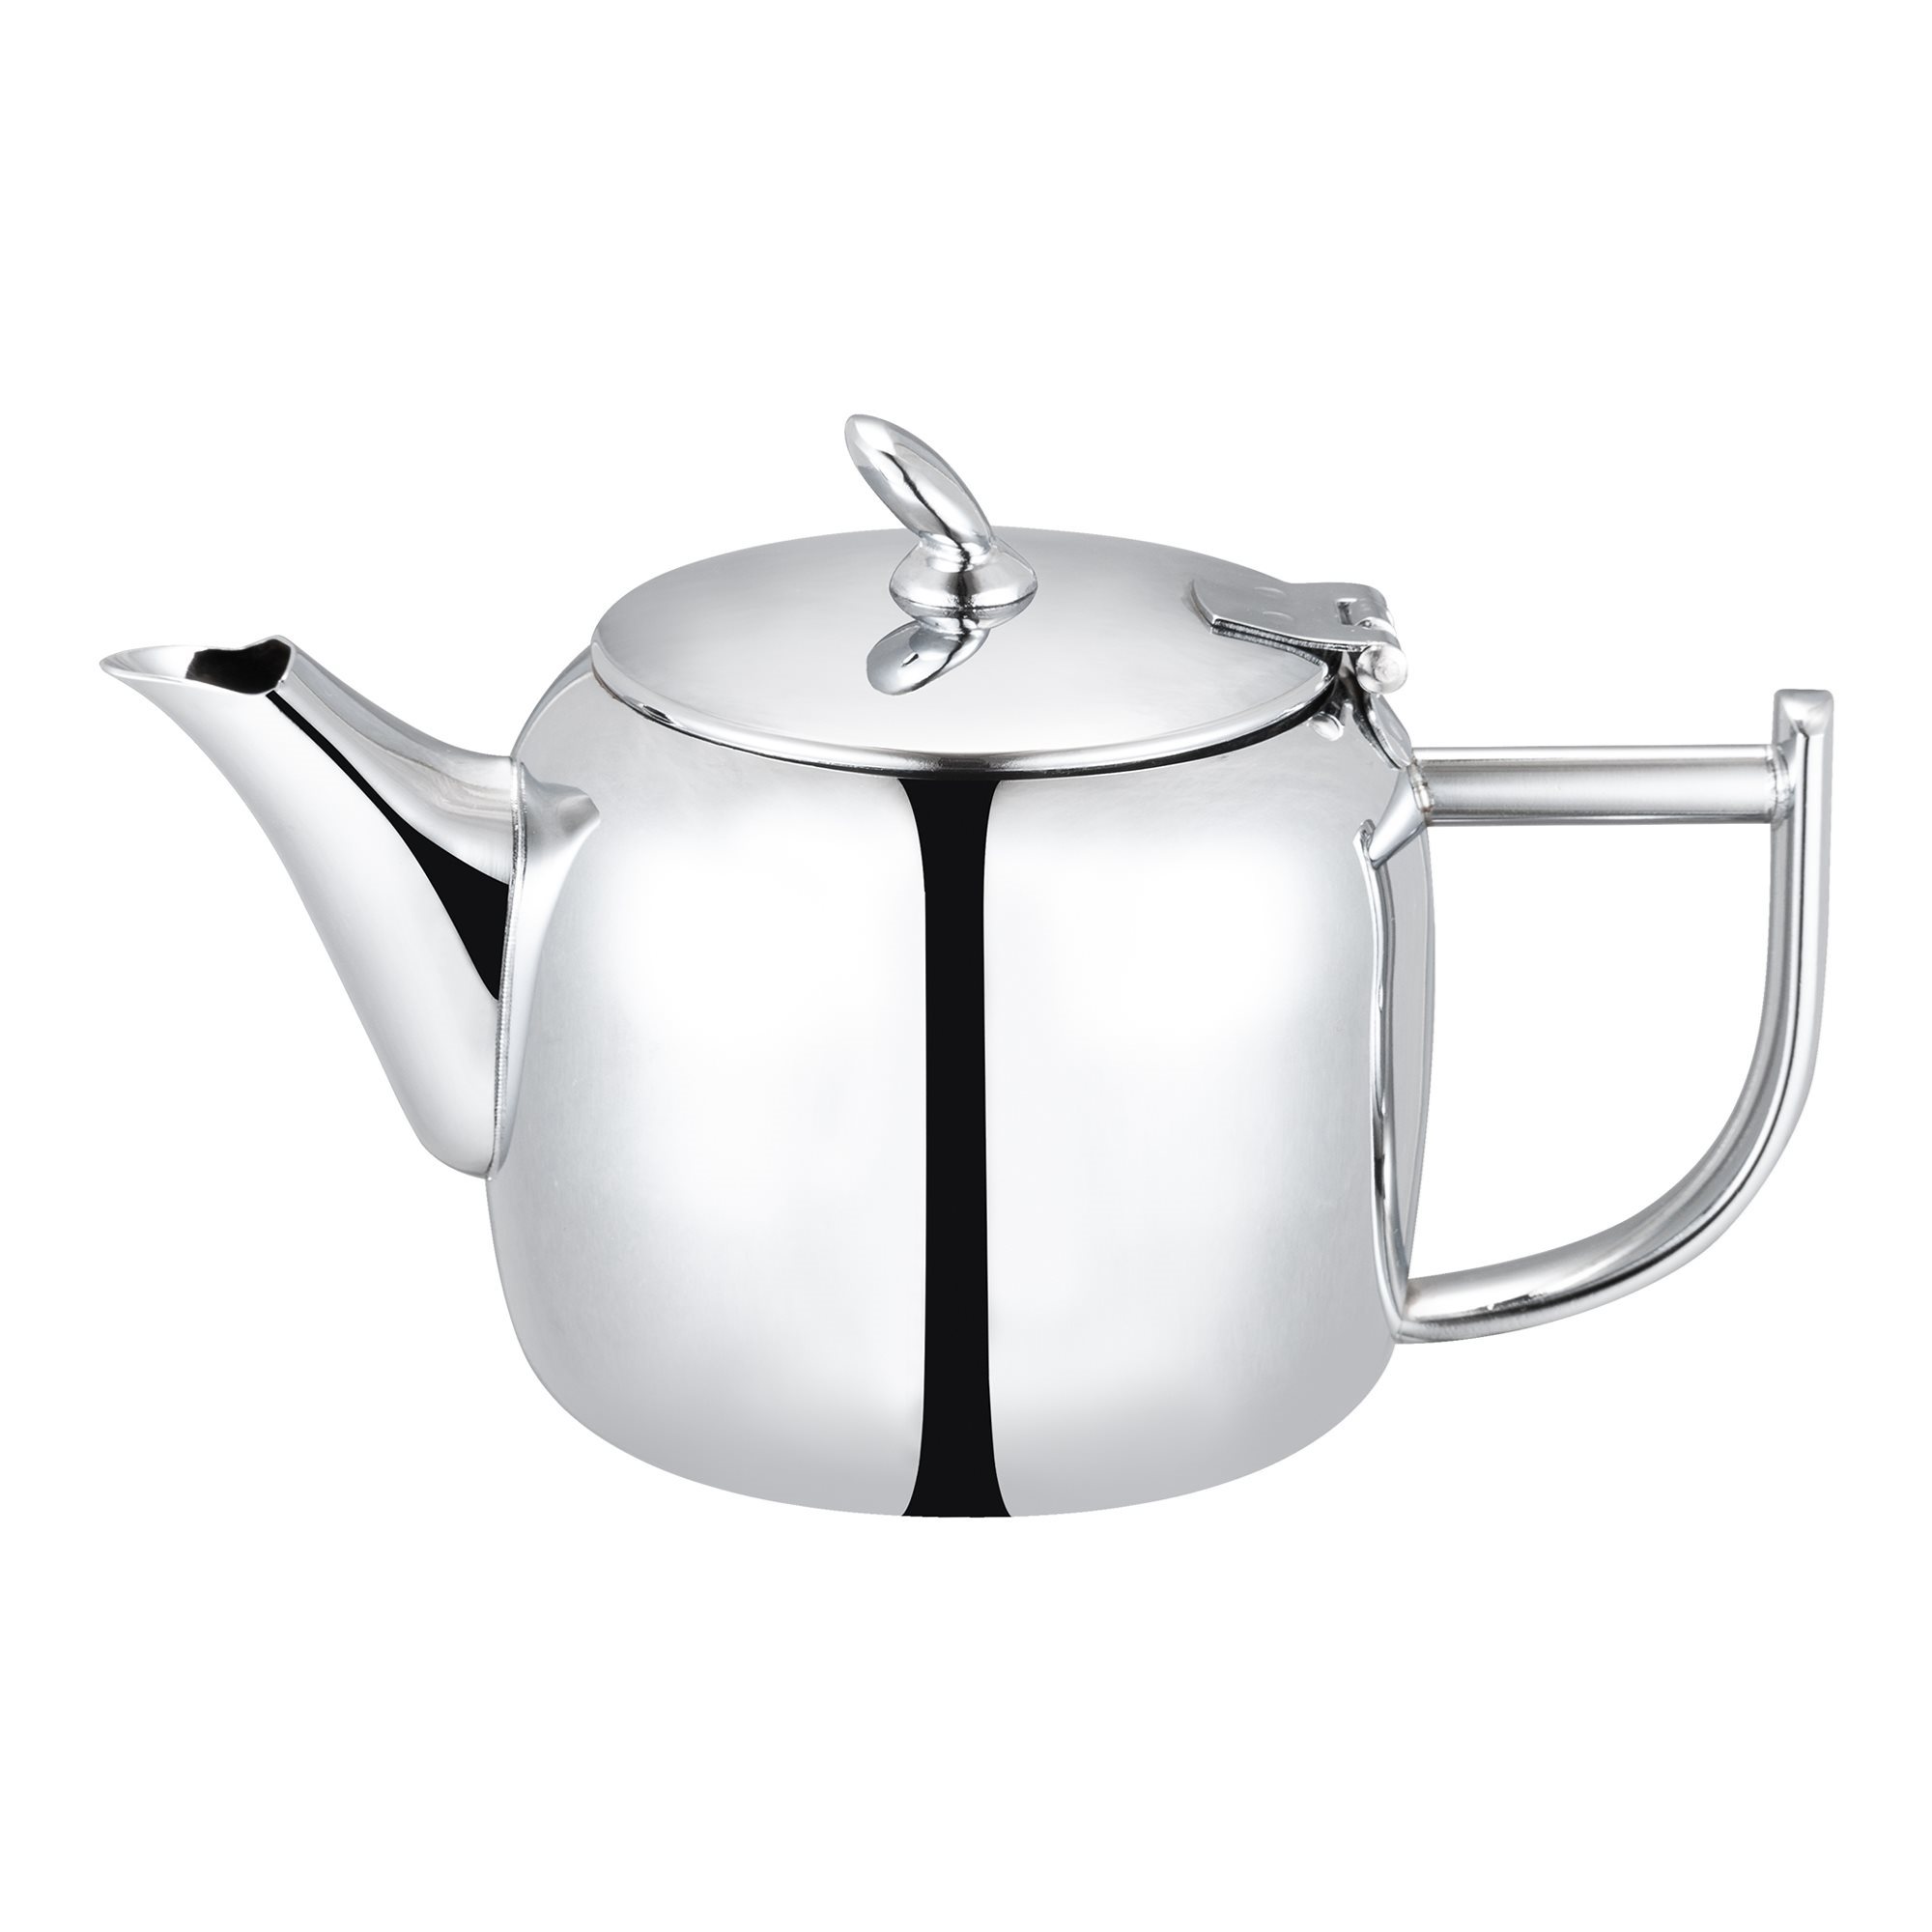 Teapot, stainless steel, 2.3L Butterfly - Korkmaz